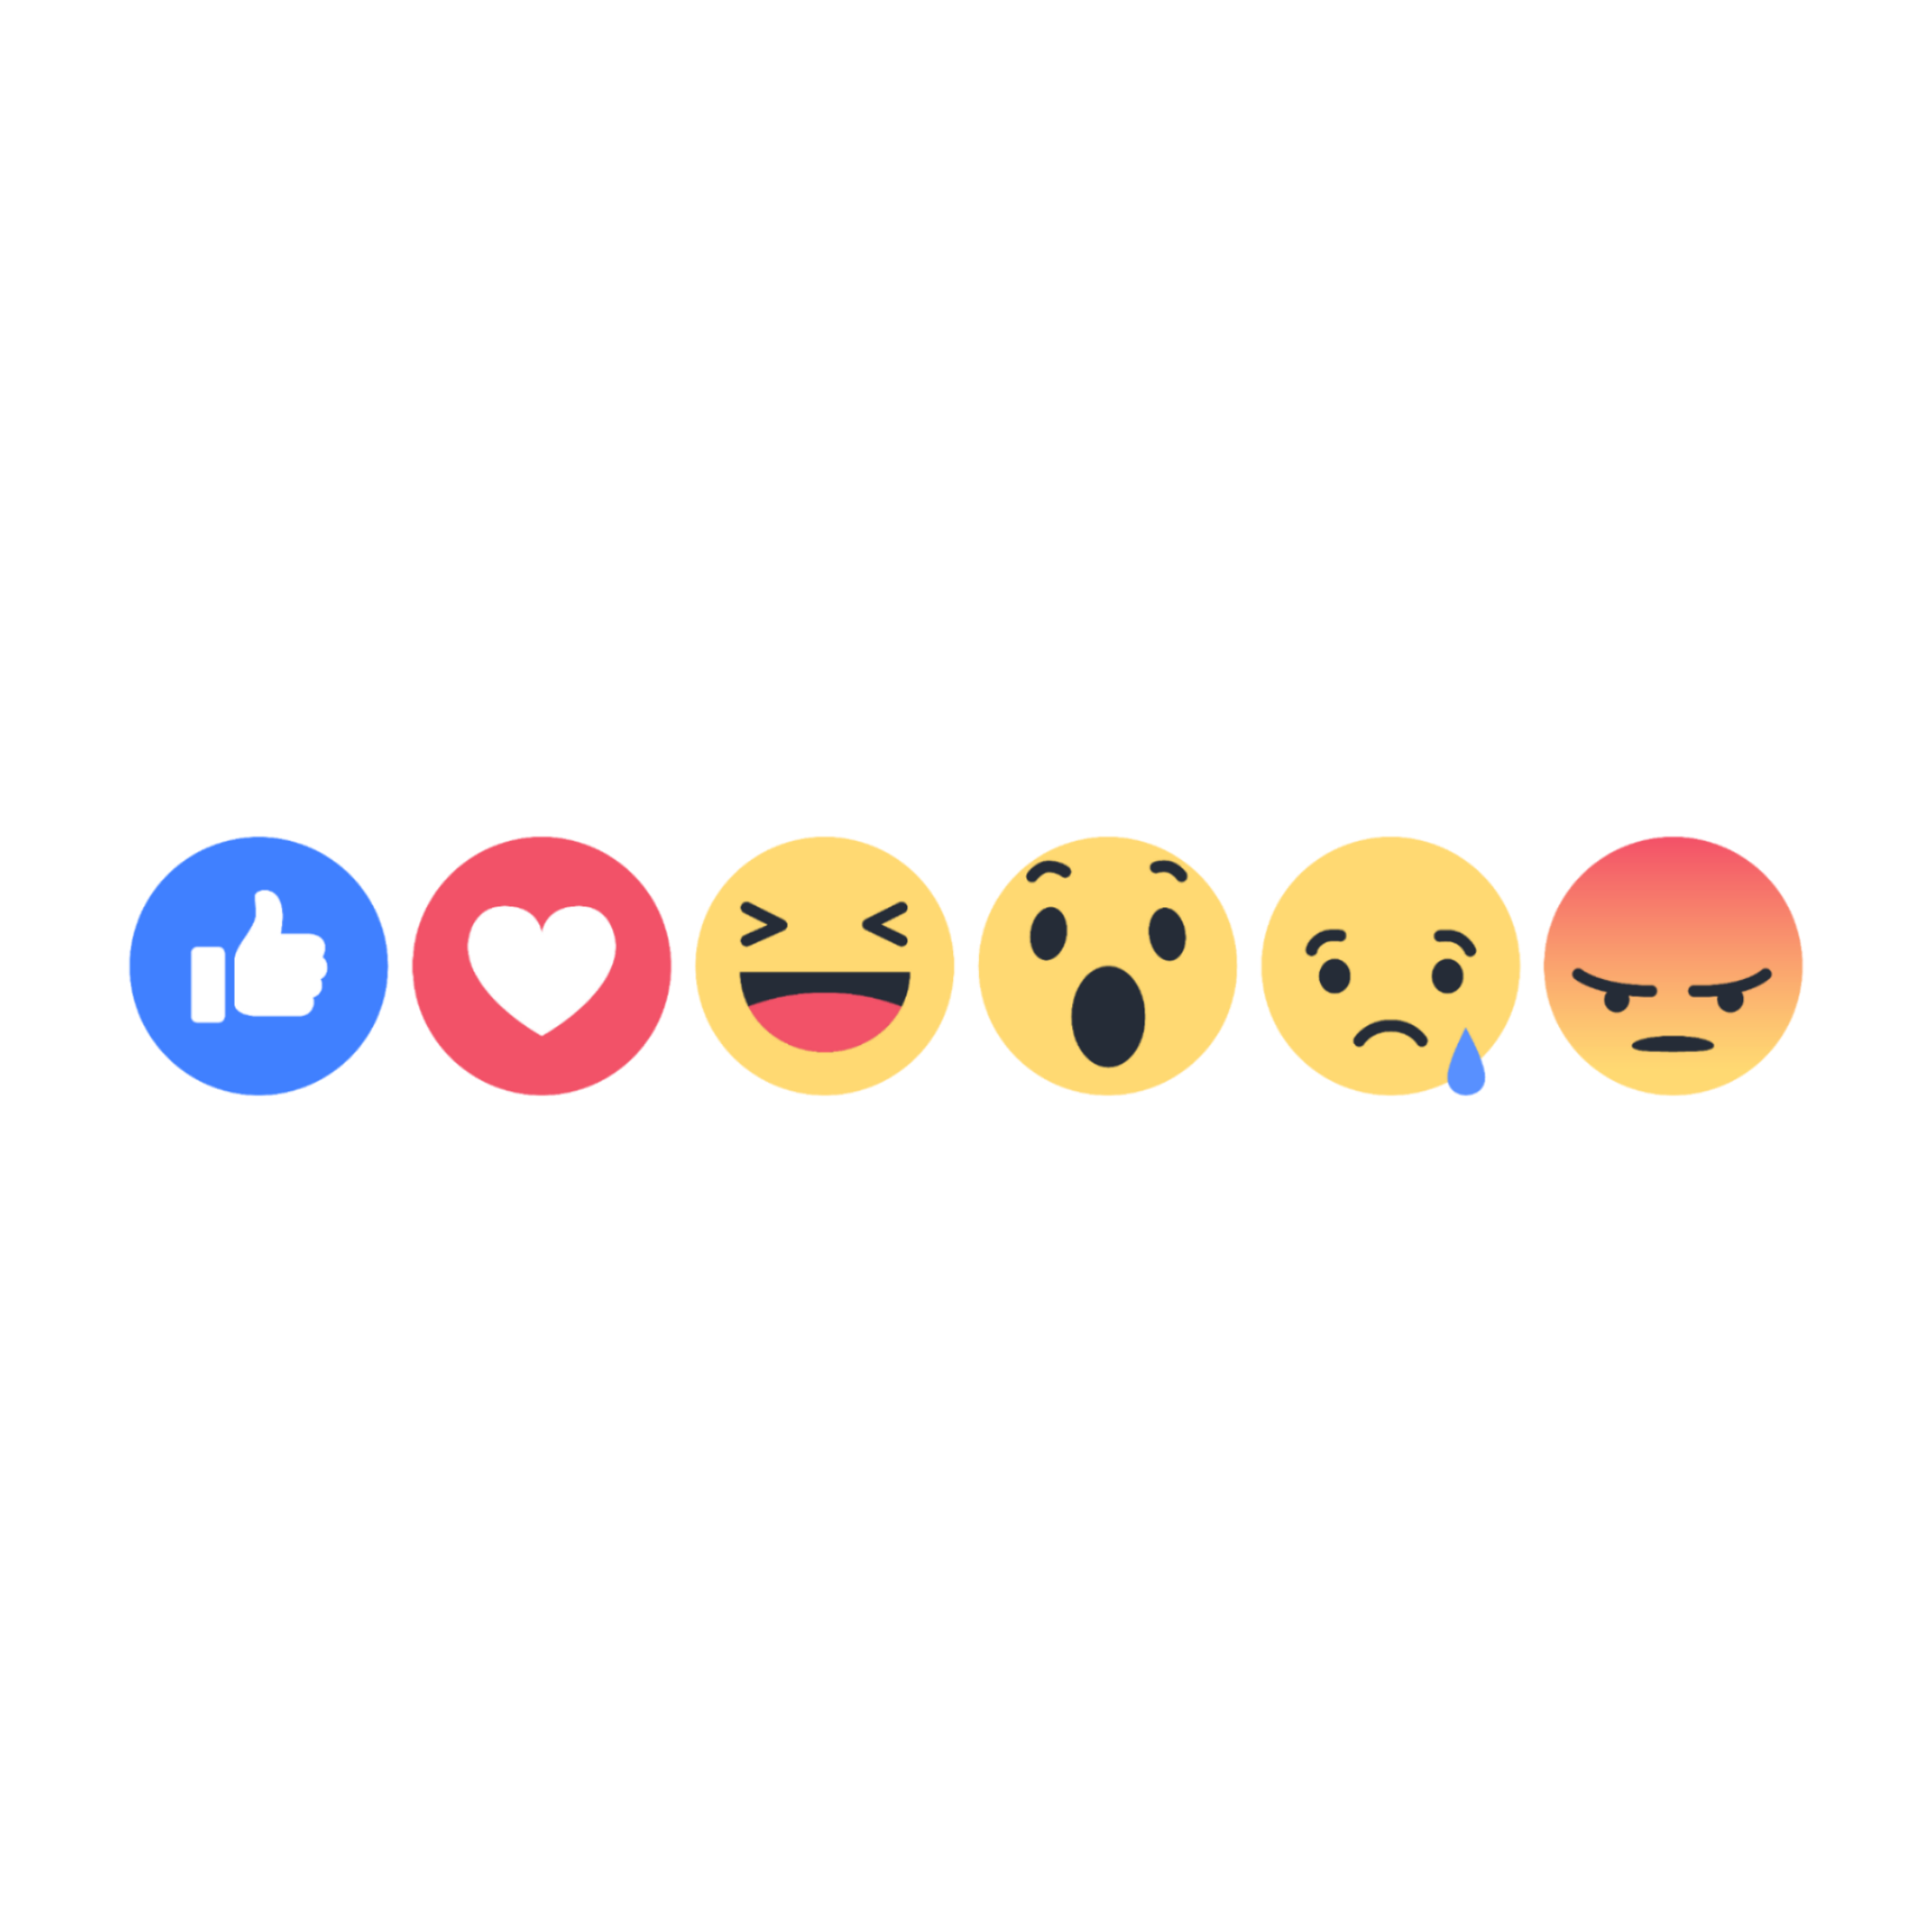 Смайлики Facebook. Haha Emoji. Like emotion. Facebook like Emoji PNG. Эмодзи логотипы